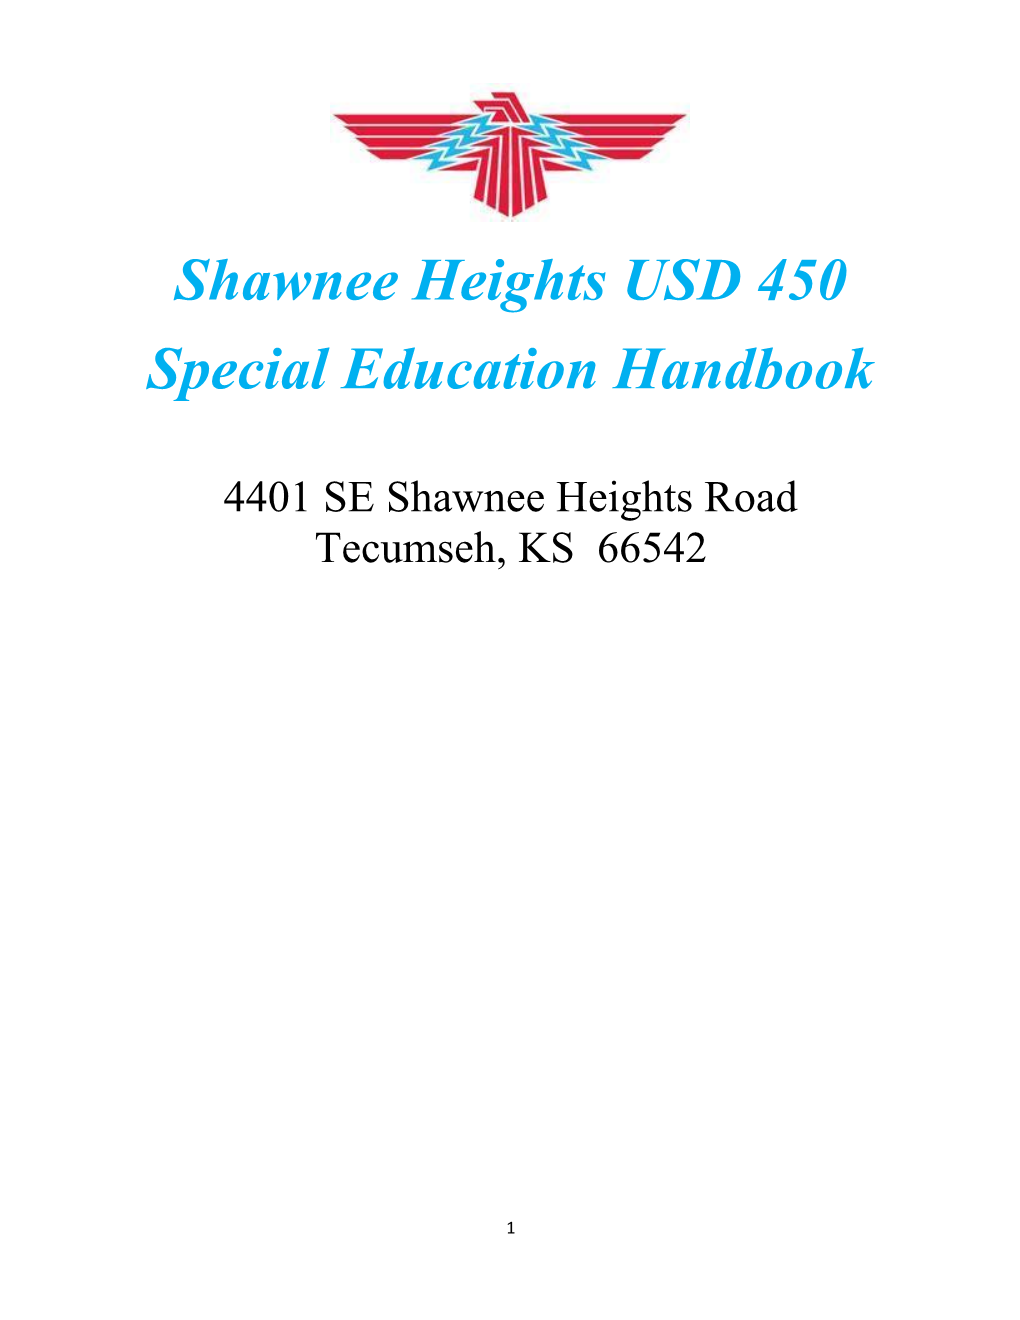 Shawnee Heights USD 450 Special Education Handbook